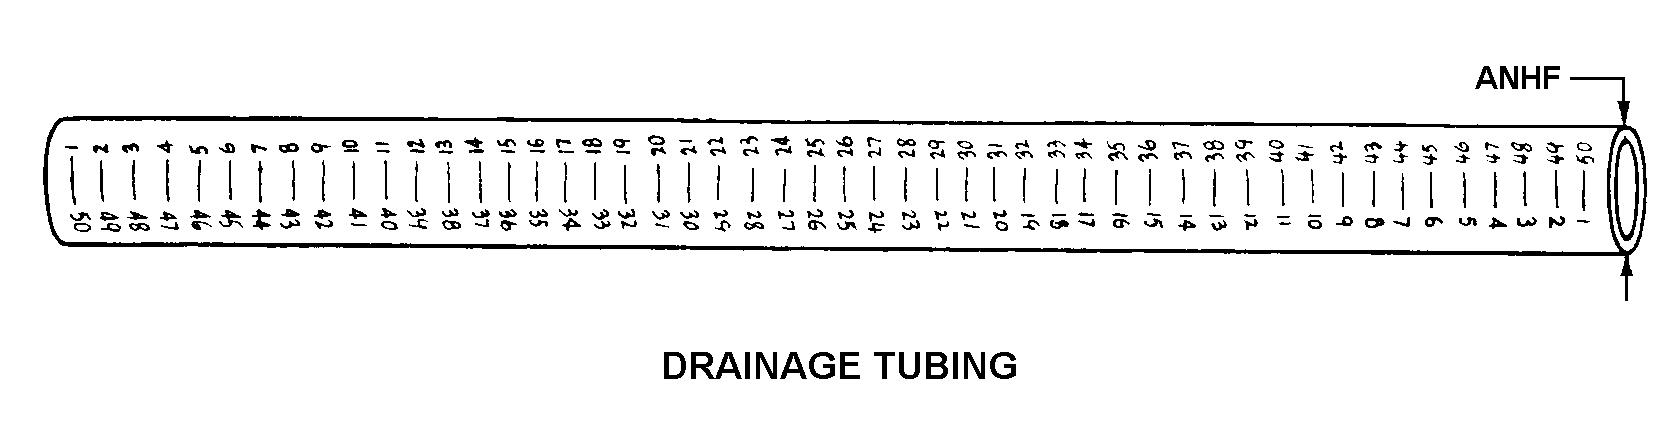 DRAINAGE TUBING style nsn 6515-01-365-2570